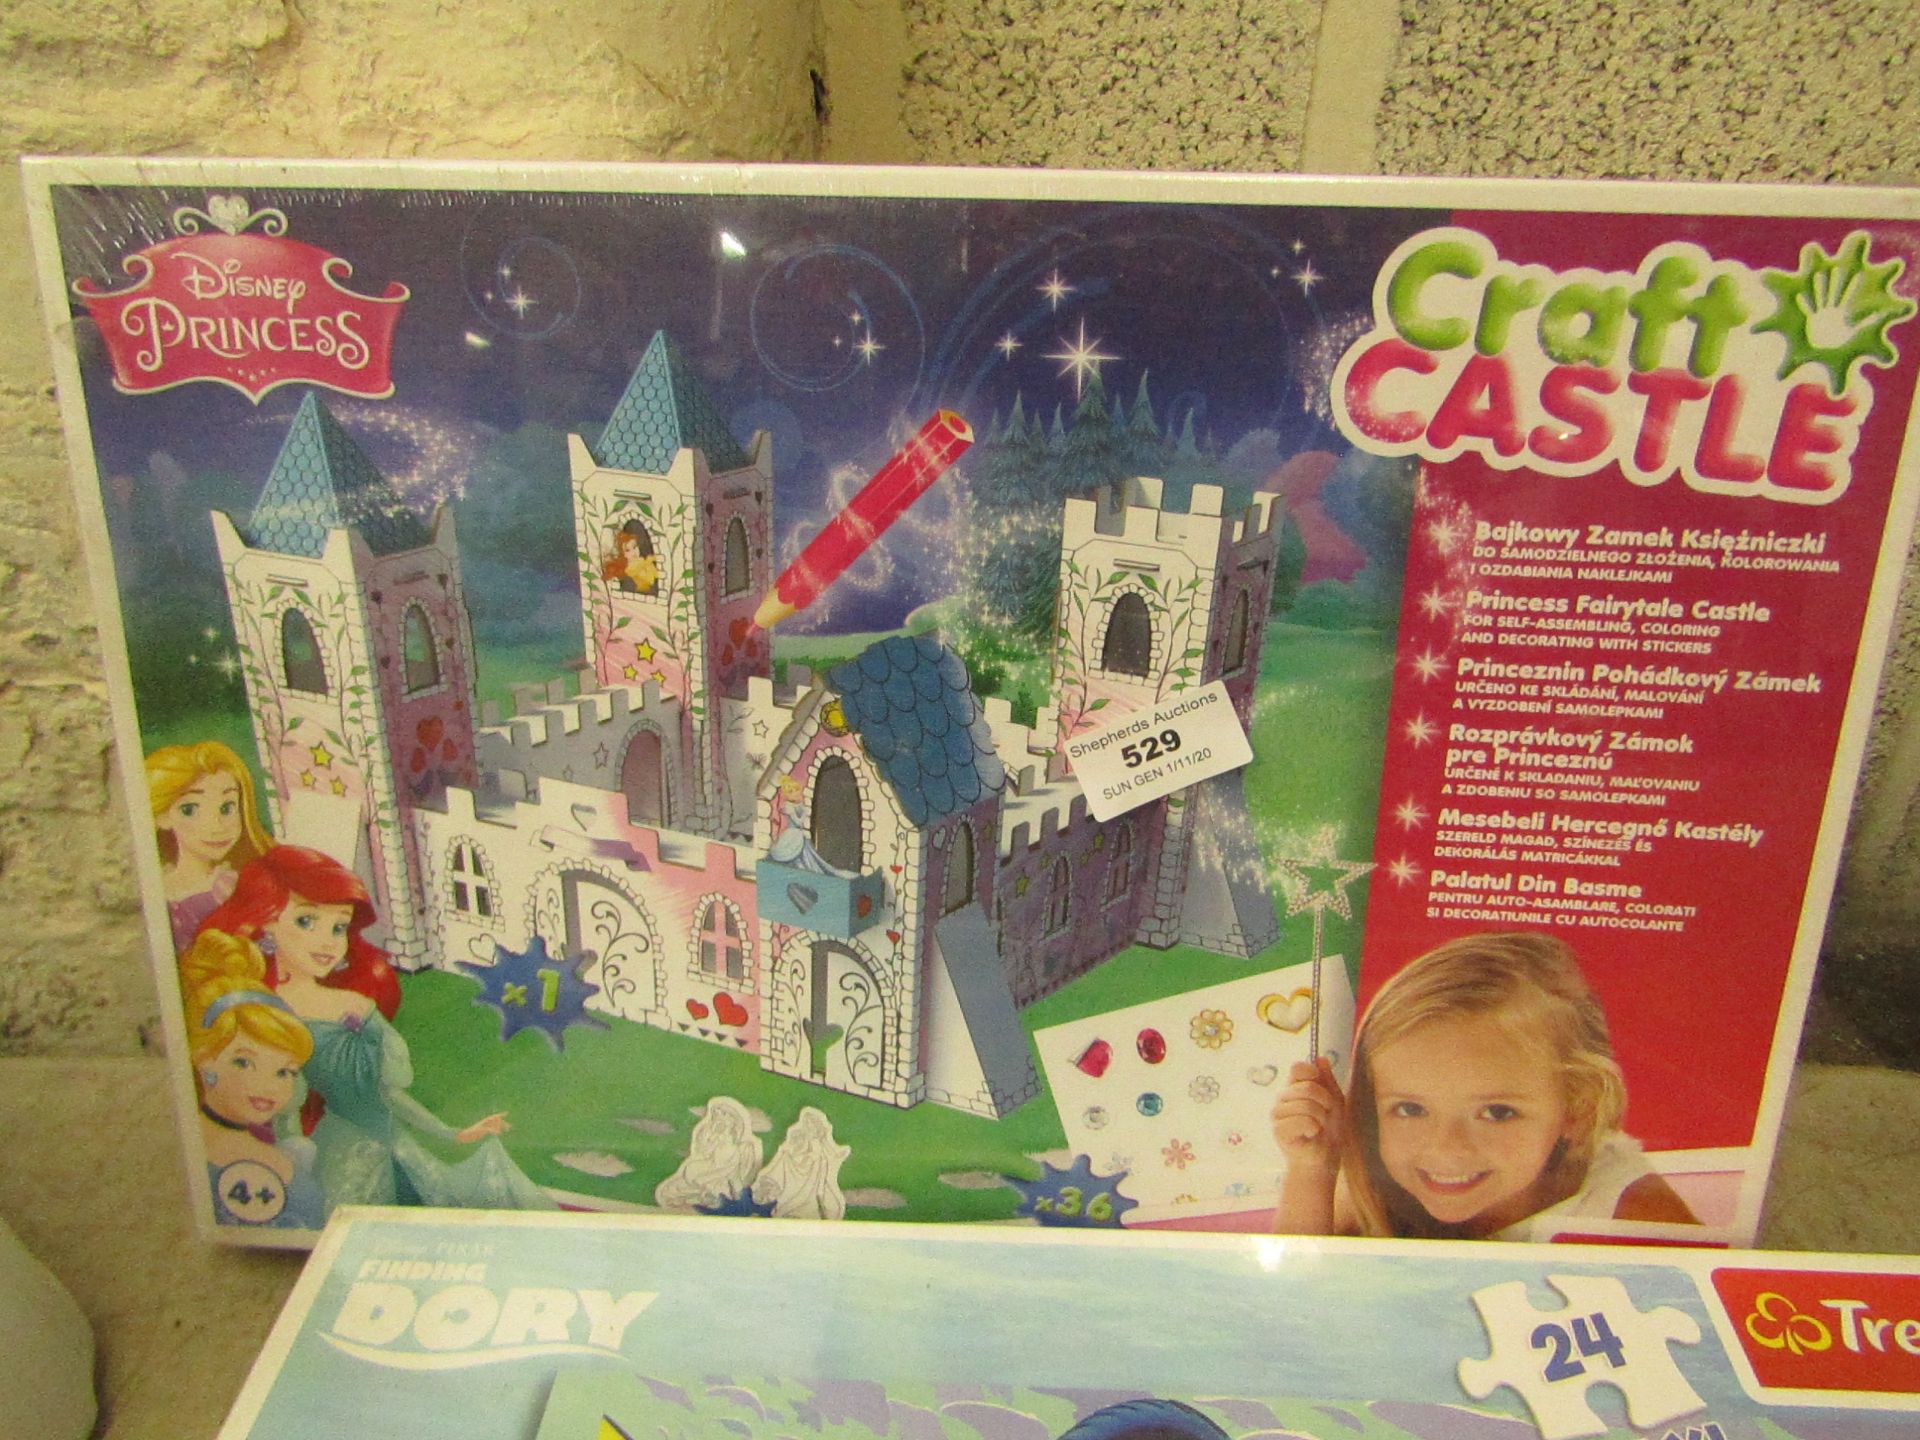 Disney Princess Craft Castle, still selaed.